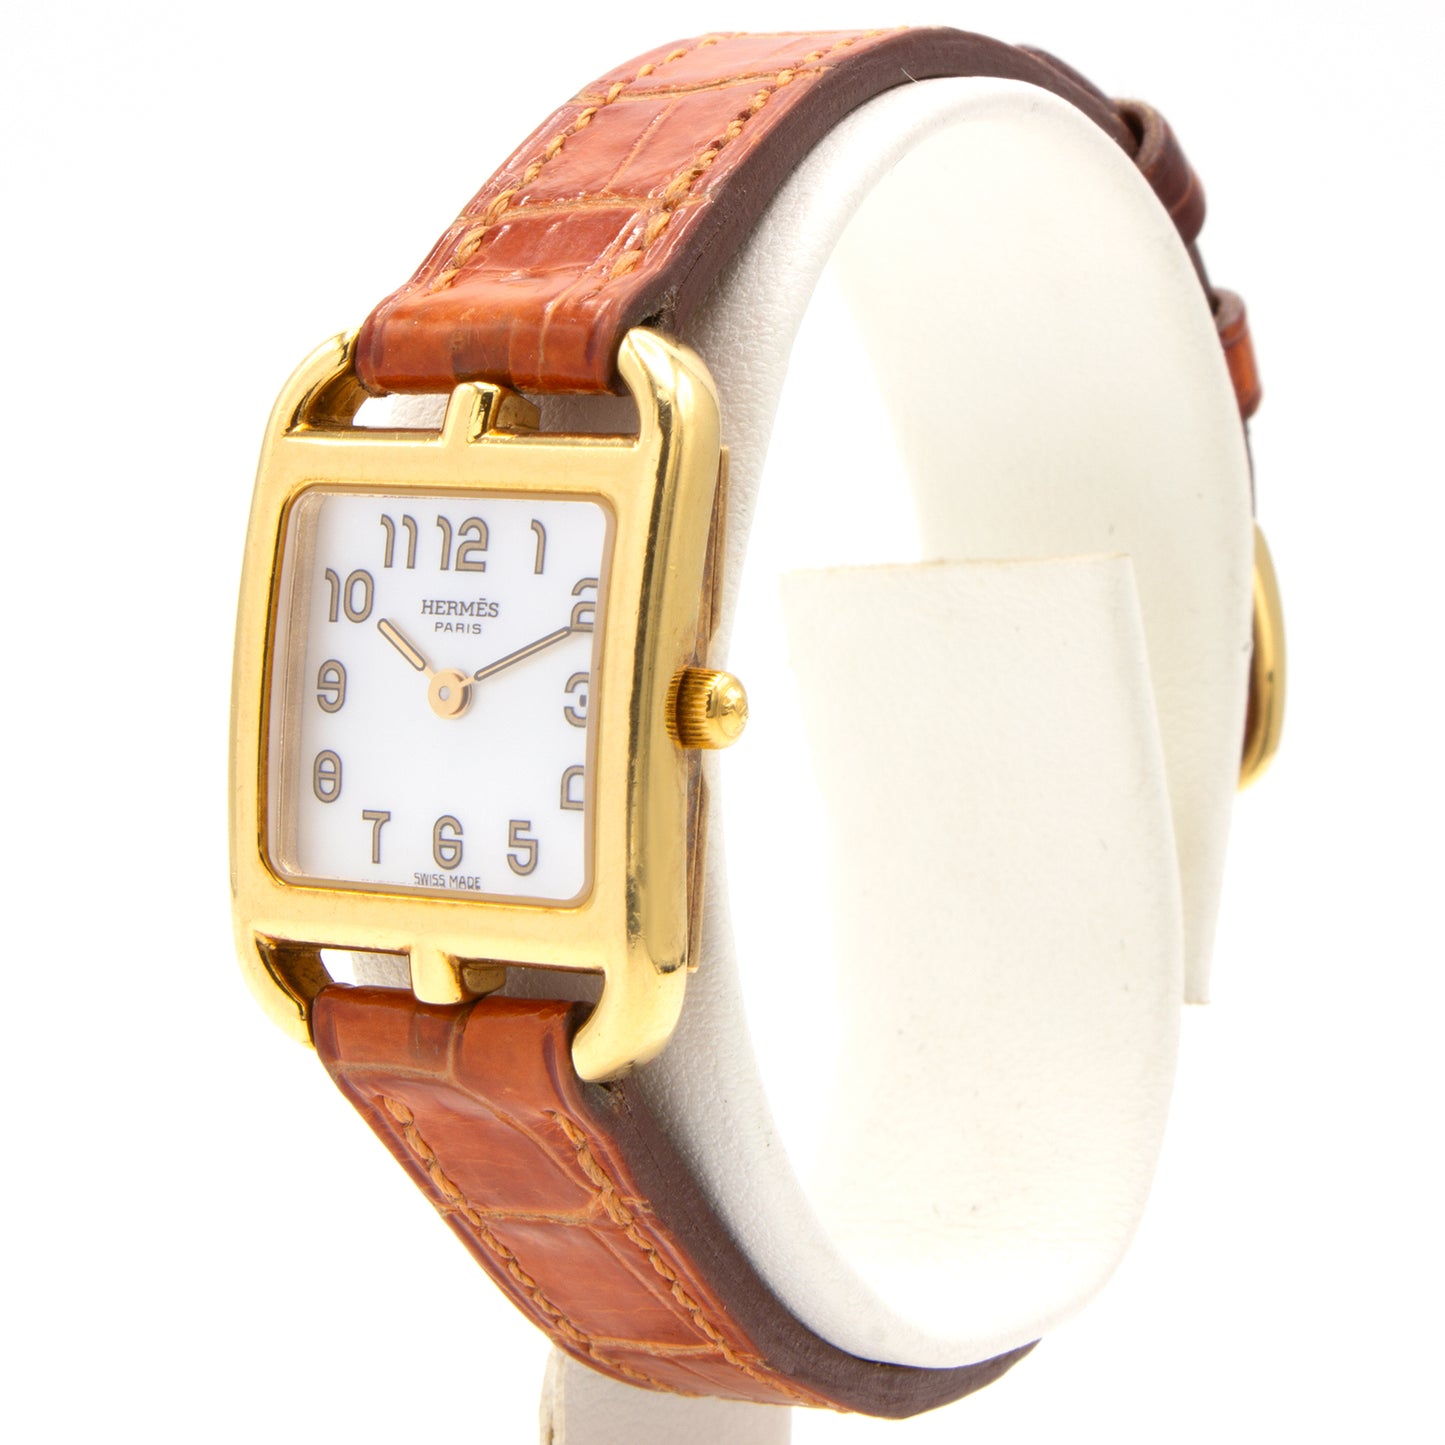 Hermès Cape Cod CC1.185 18K watch